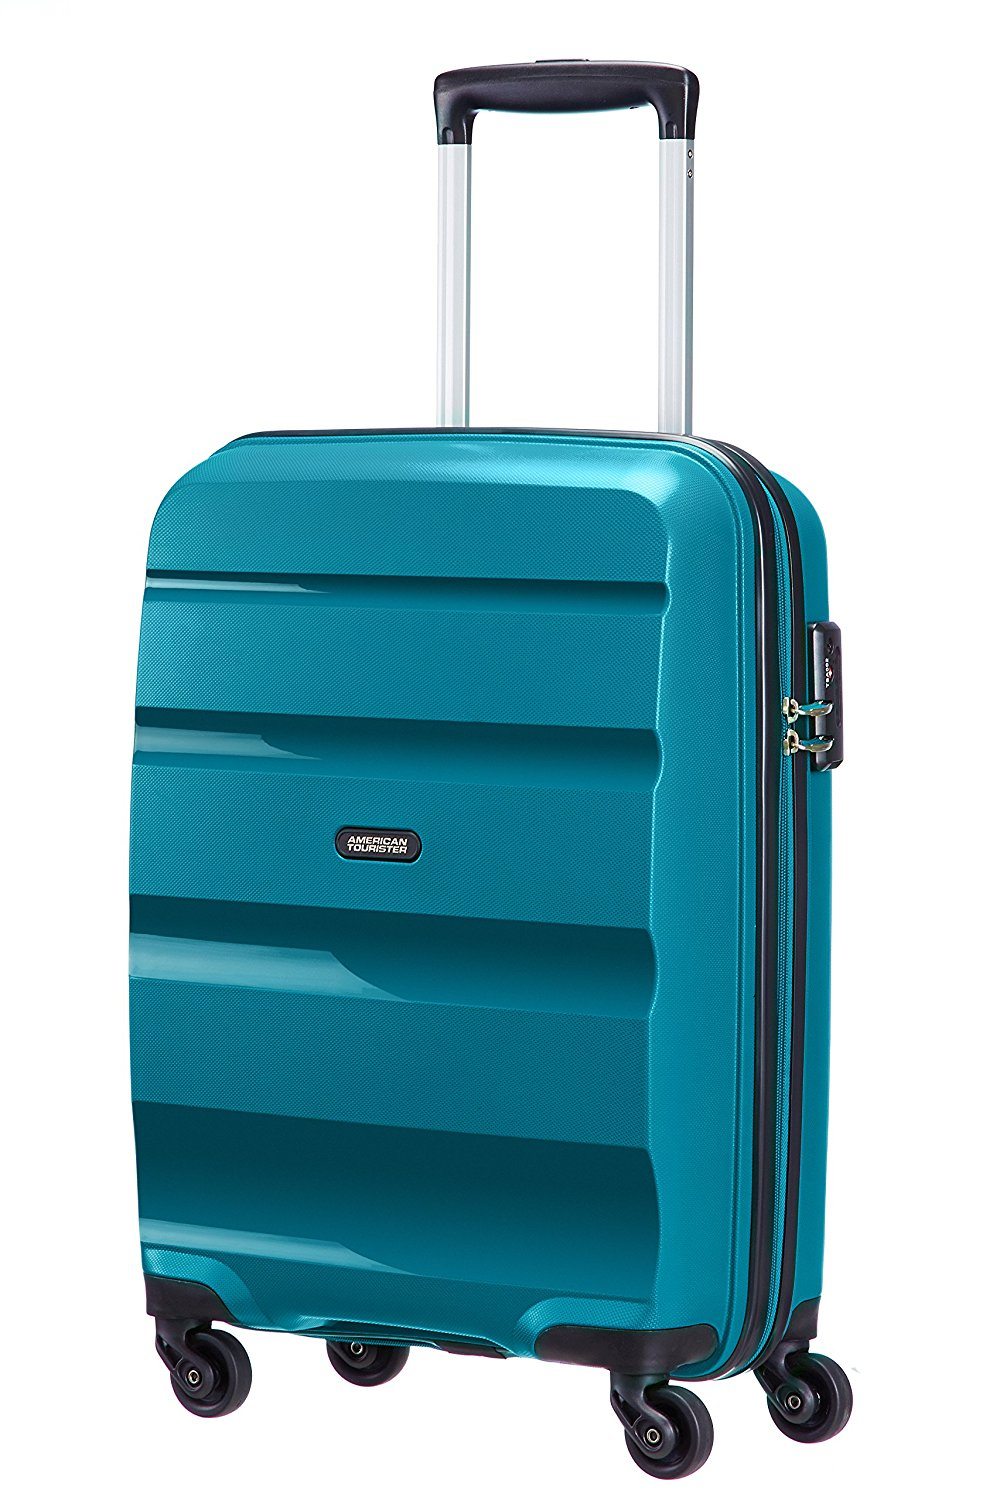 american-tourister-bon-air-4-wheel-suitcase